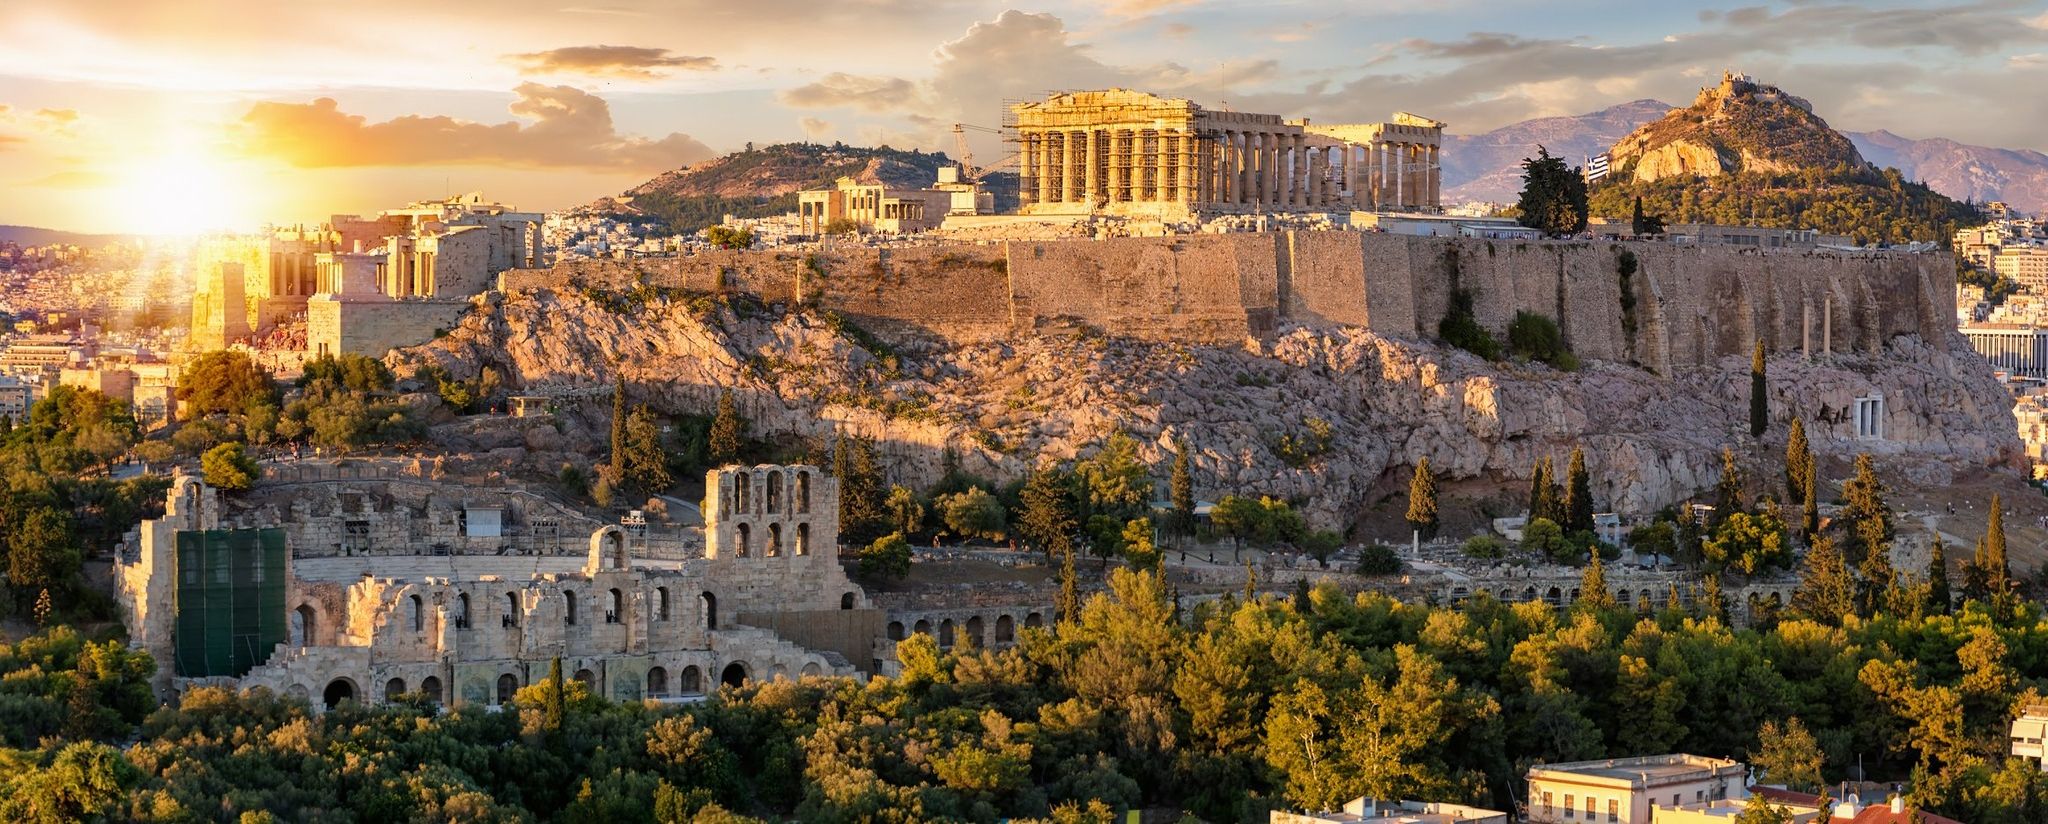 Athens - capital city of Greece